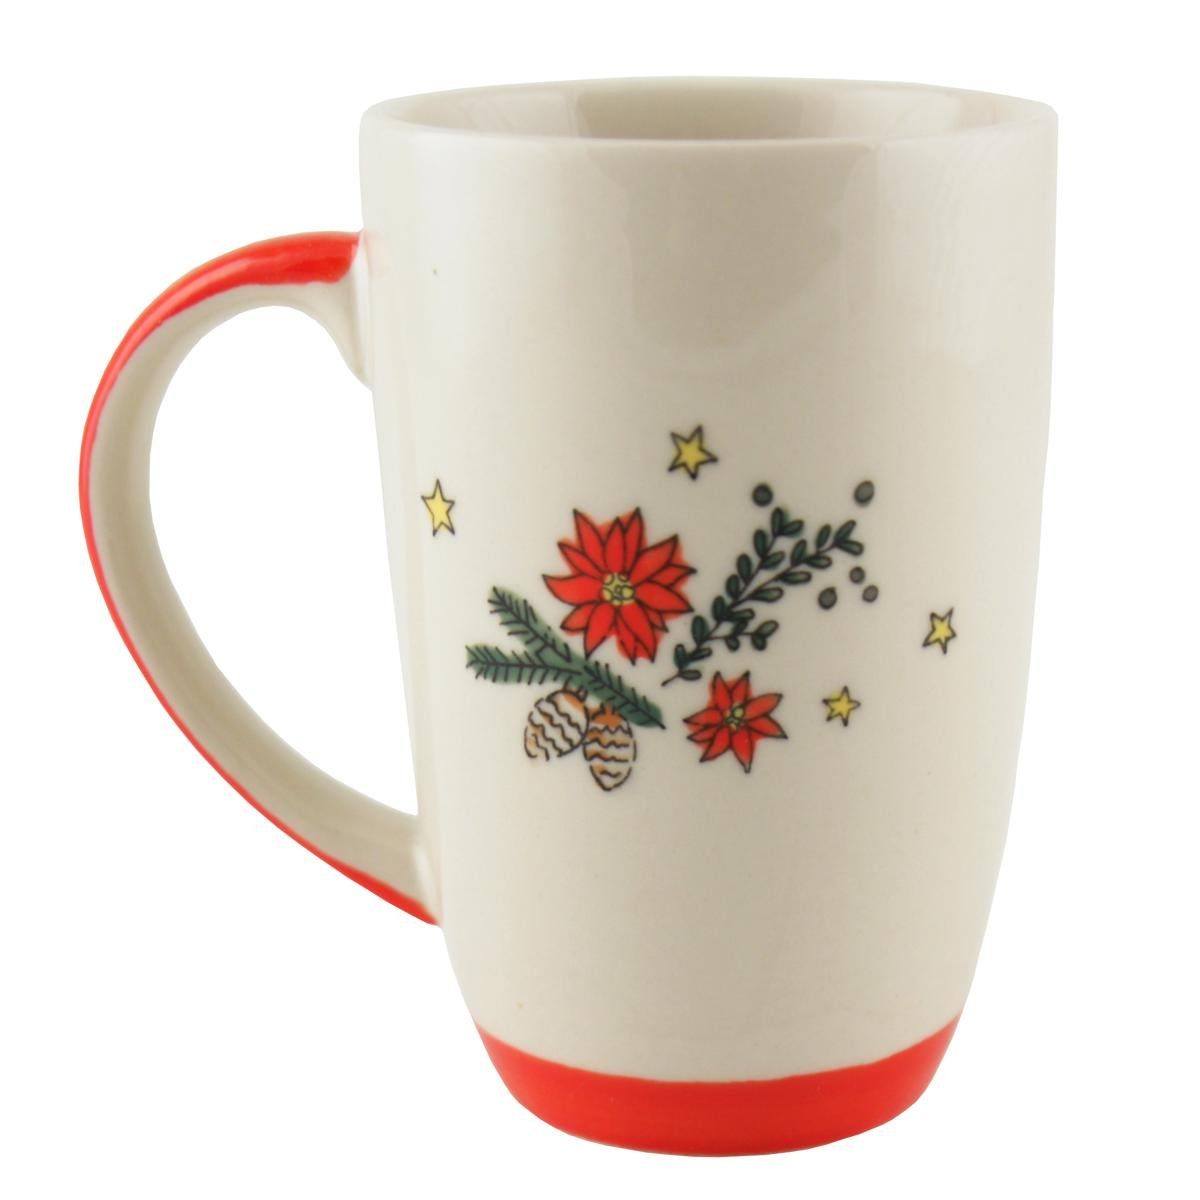 Keramik Keramik-Design-Becher Mila Mila Becher Weihnachtskranz,